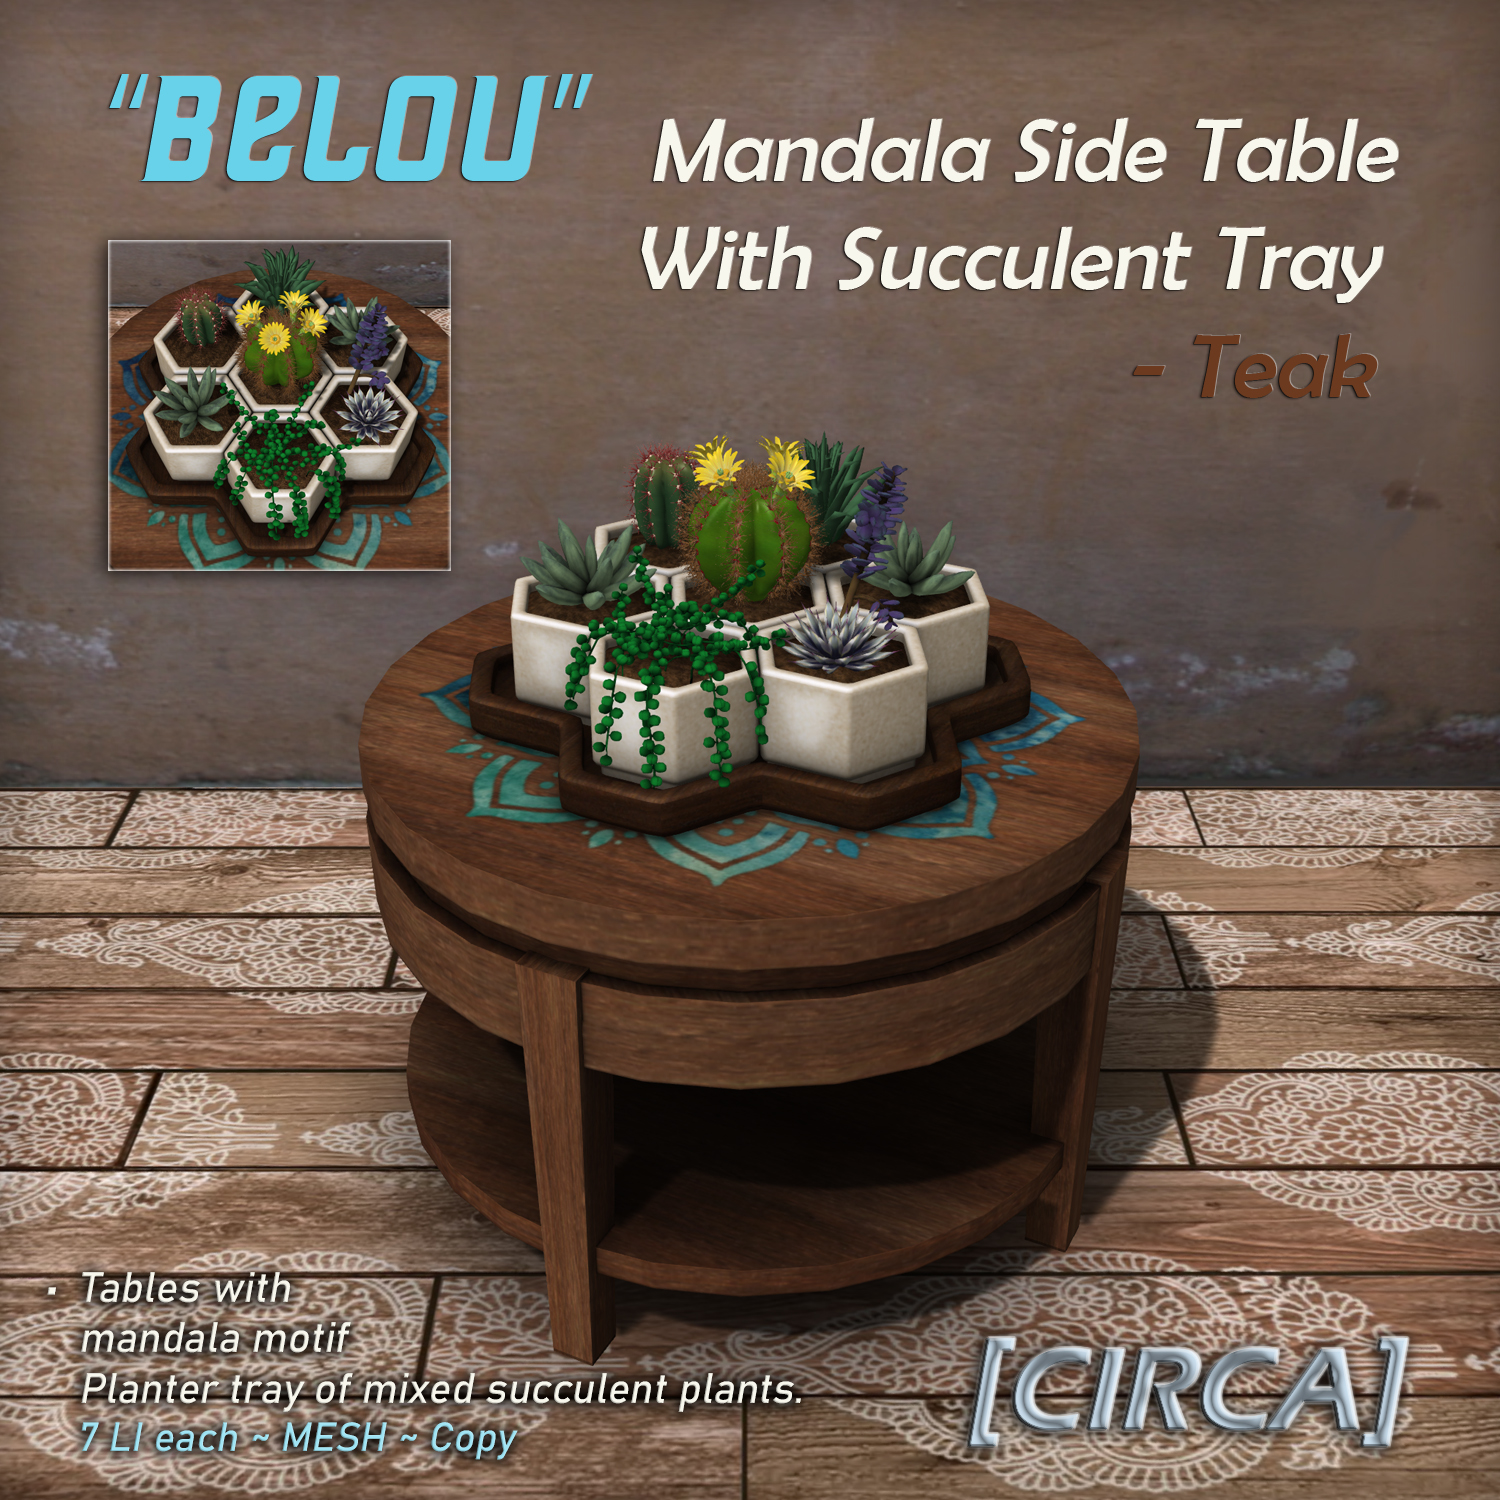 Circa – Bejou Mandala Side Table Collections